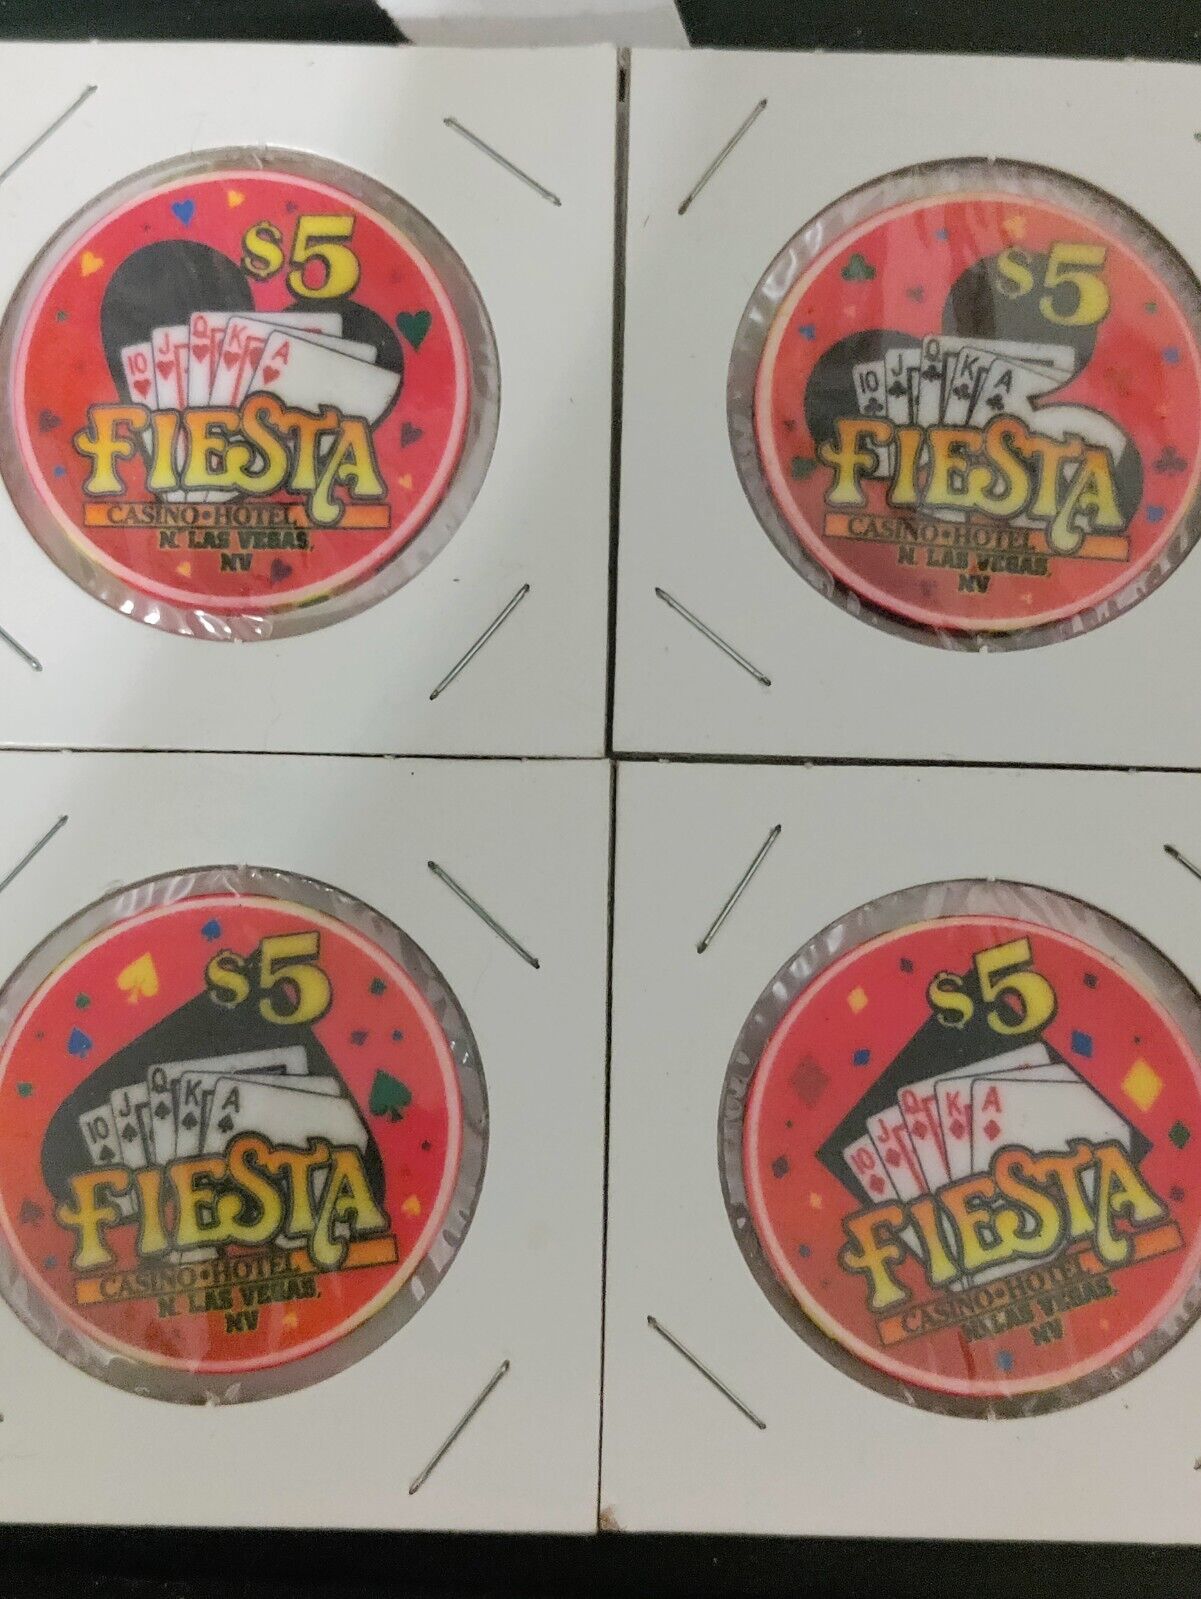 Whole Set Fiesta Casino $5 chip All Suits - N Las Vegas NV - Royal Flush 1998 